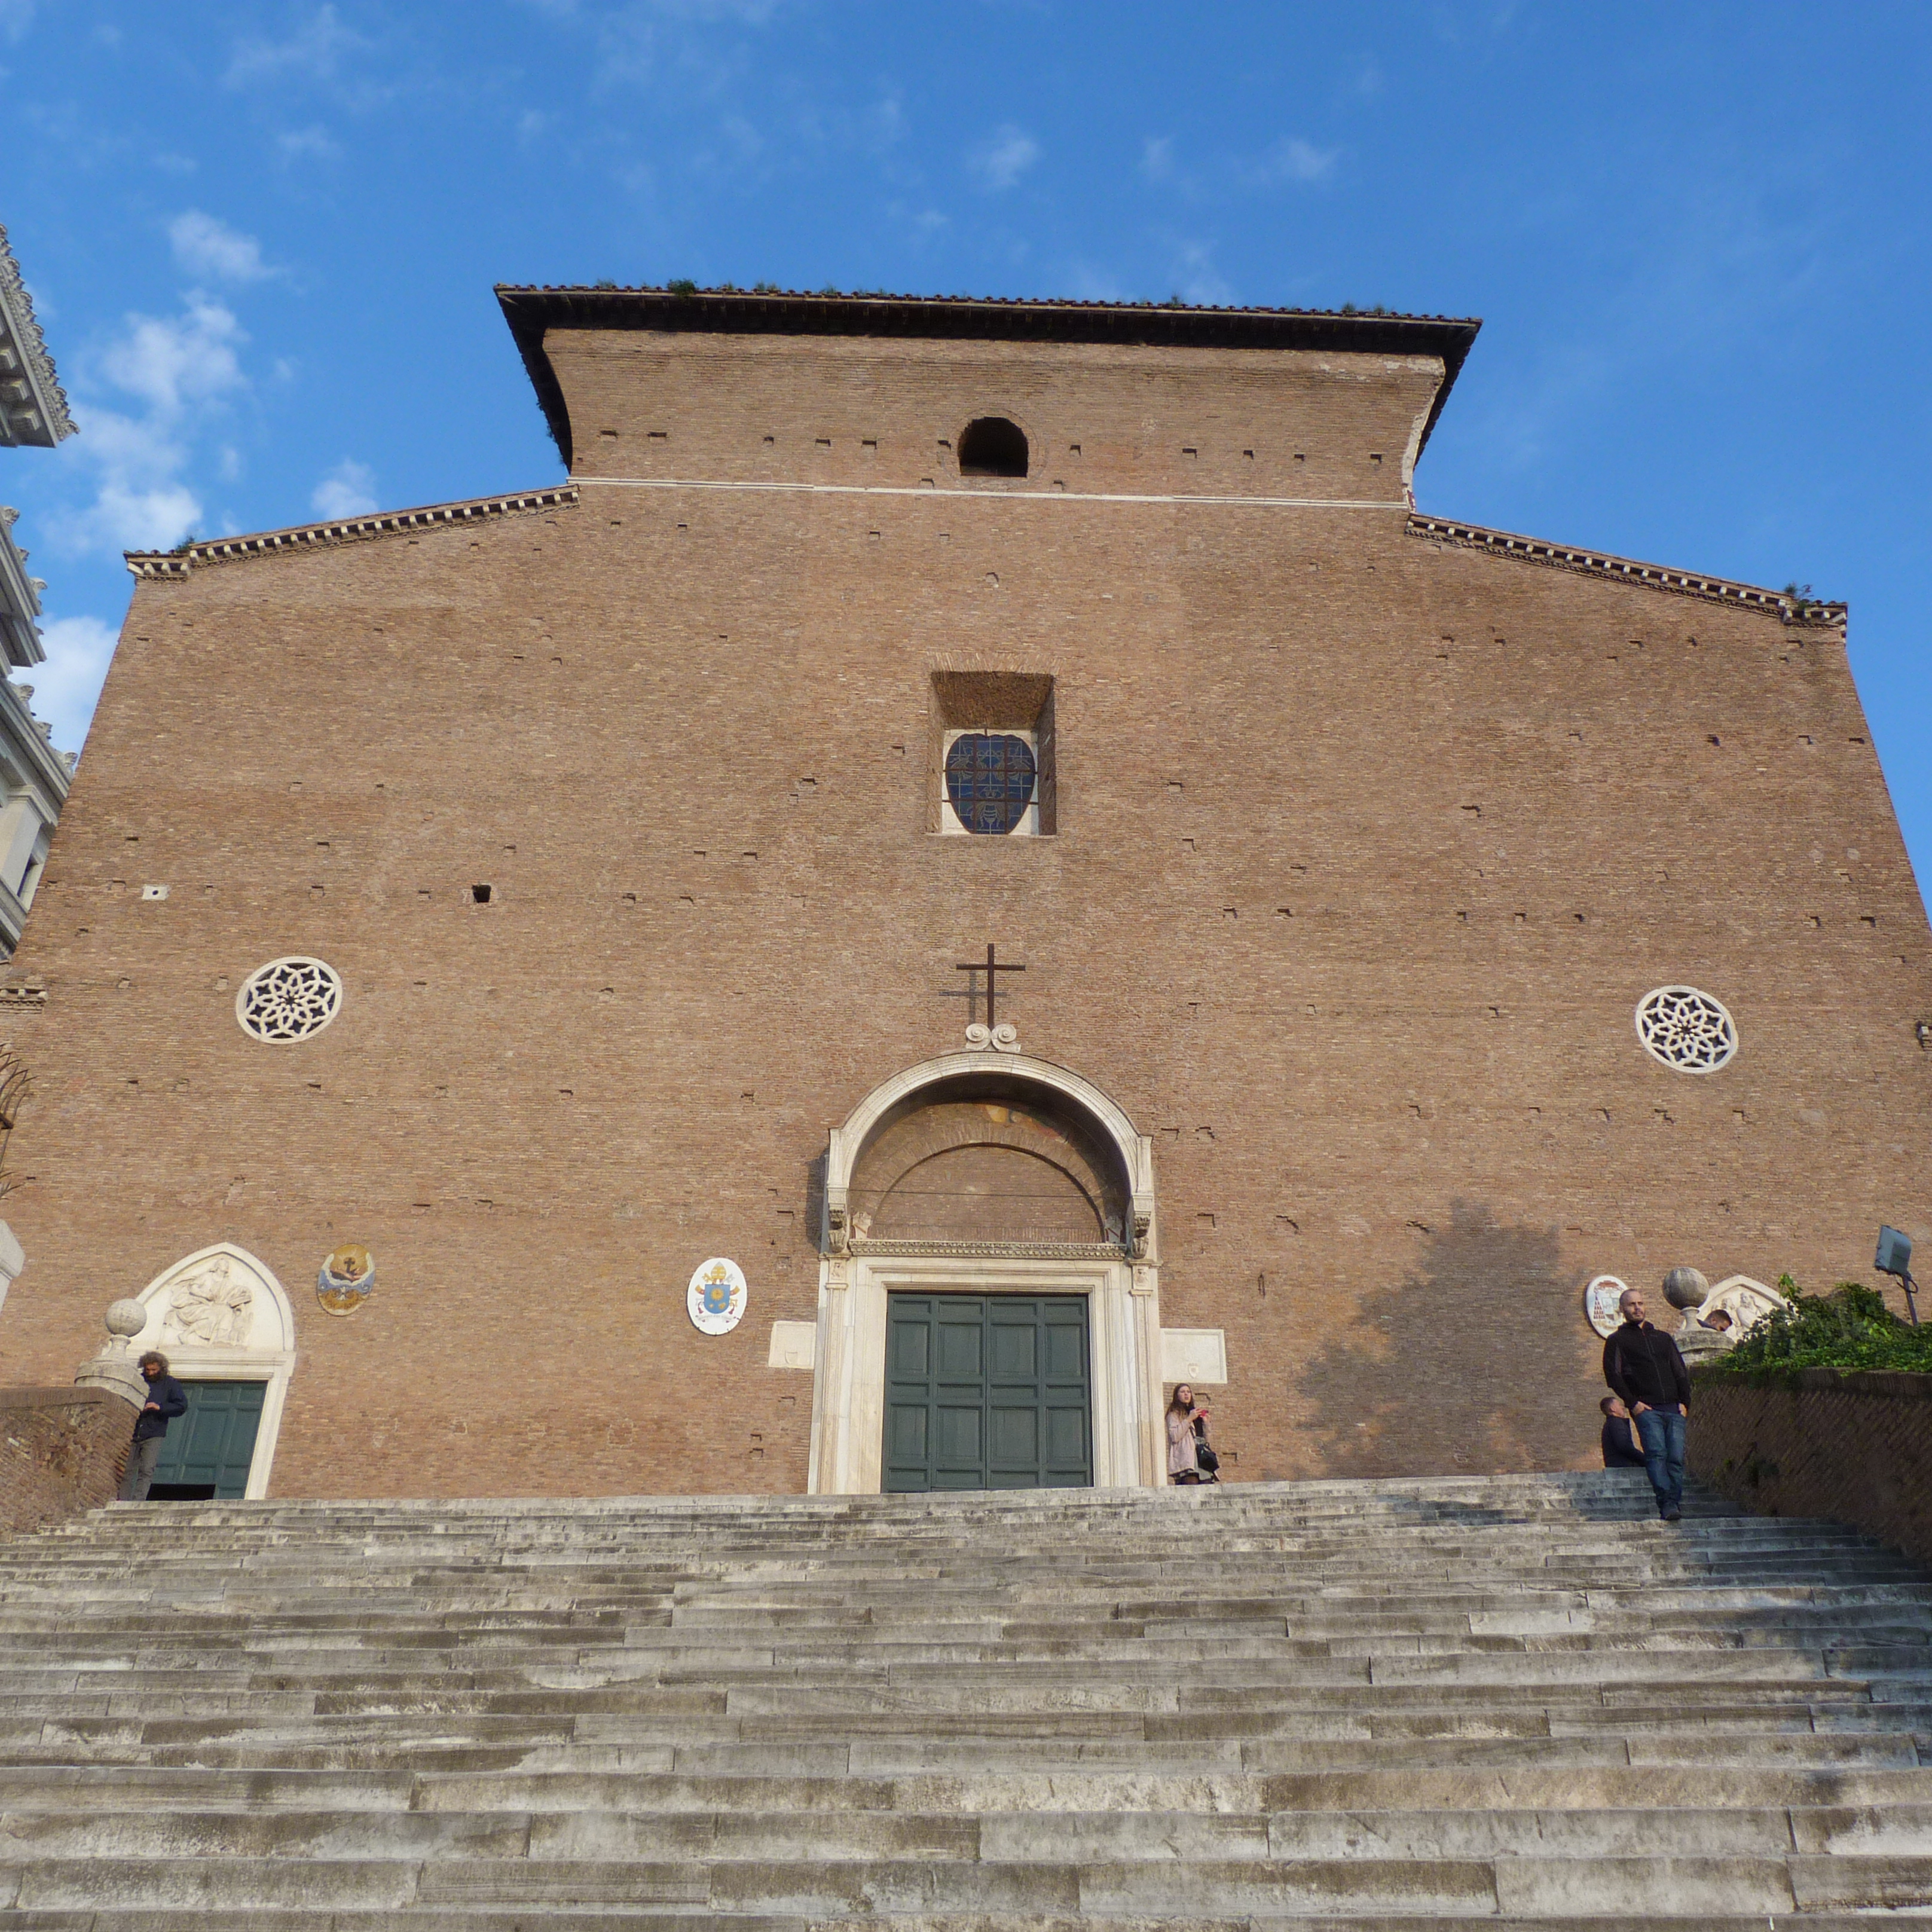 Basilica di Santa Maria in Aracoeli